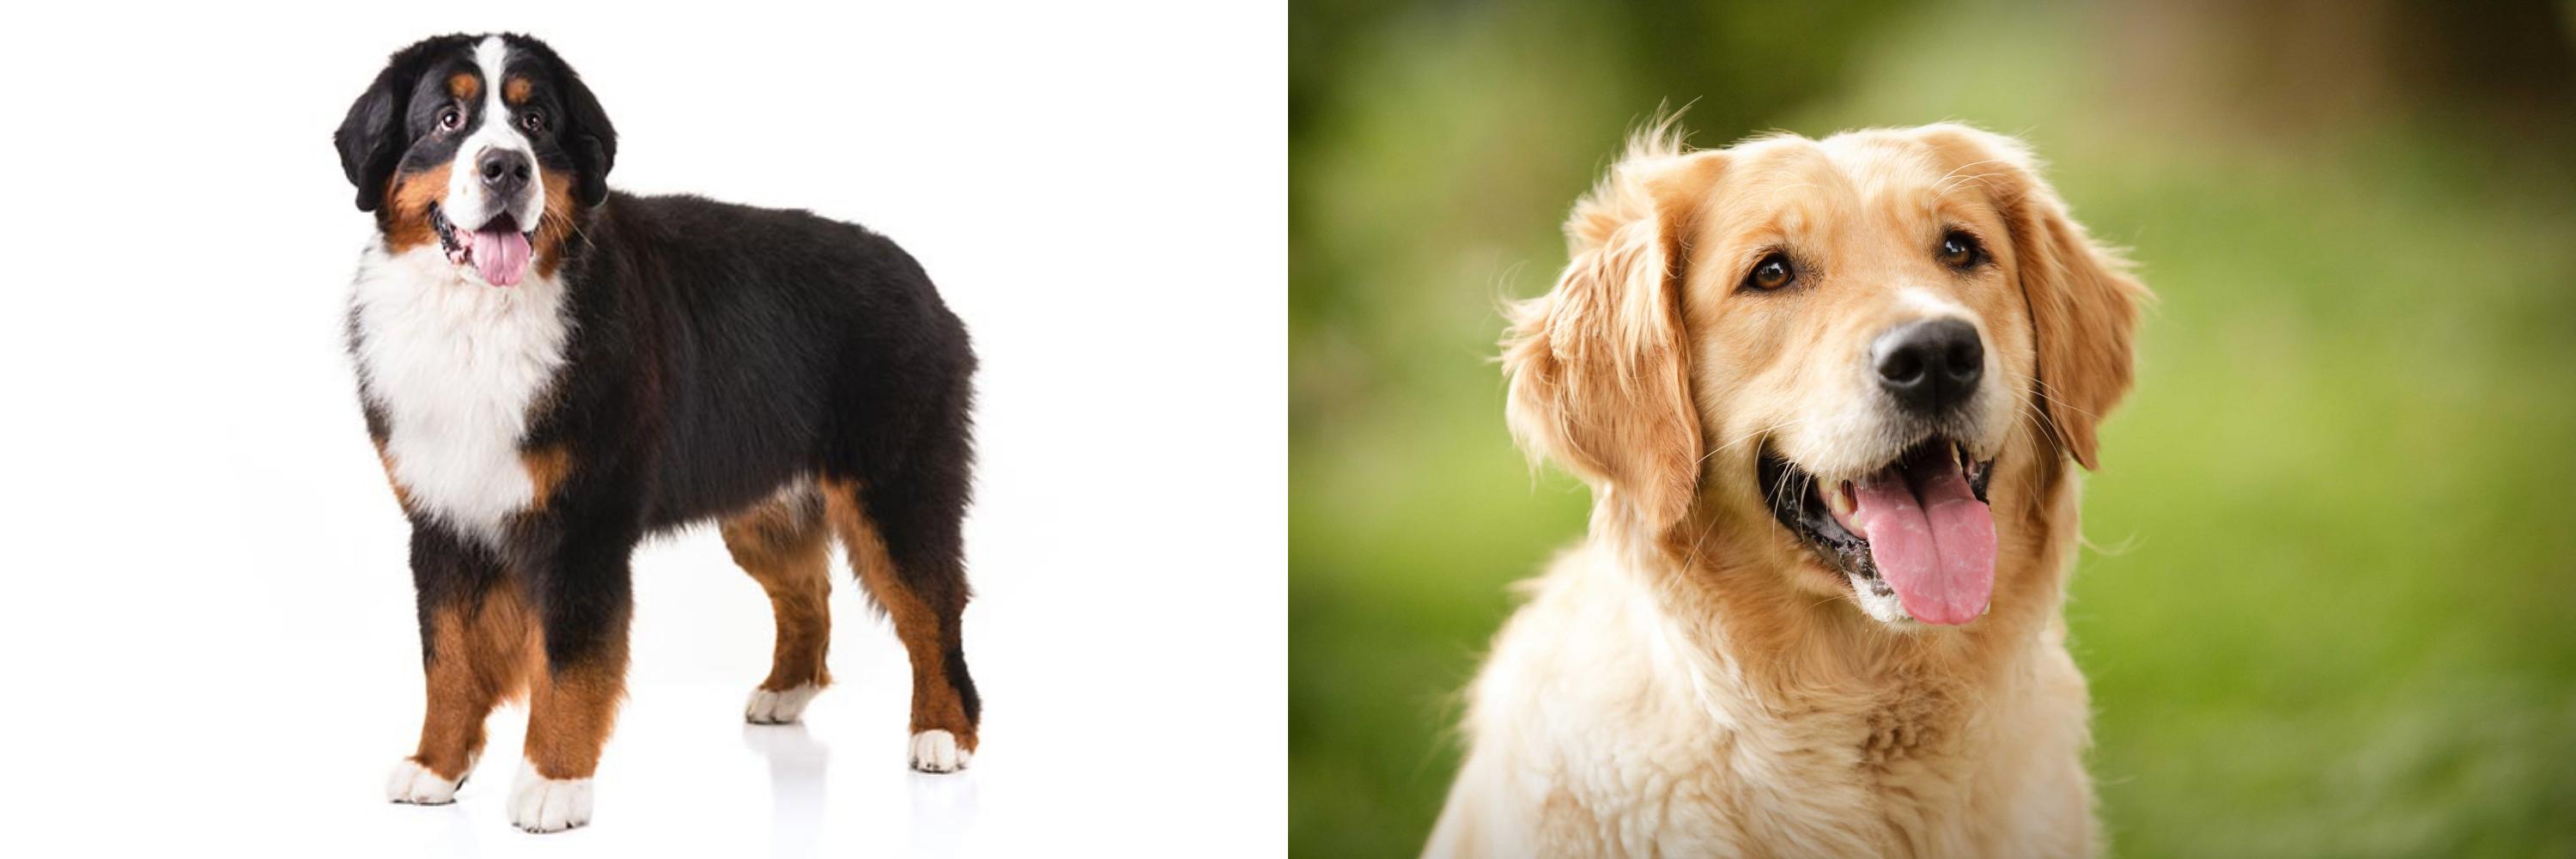 Bernese Mountain Dog Vs Golden Retriever Breed Comparison